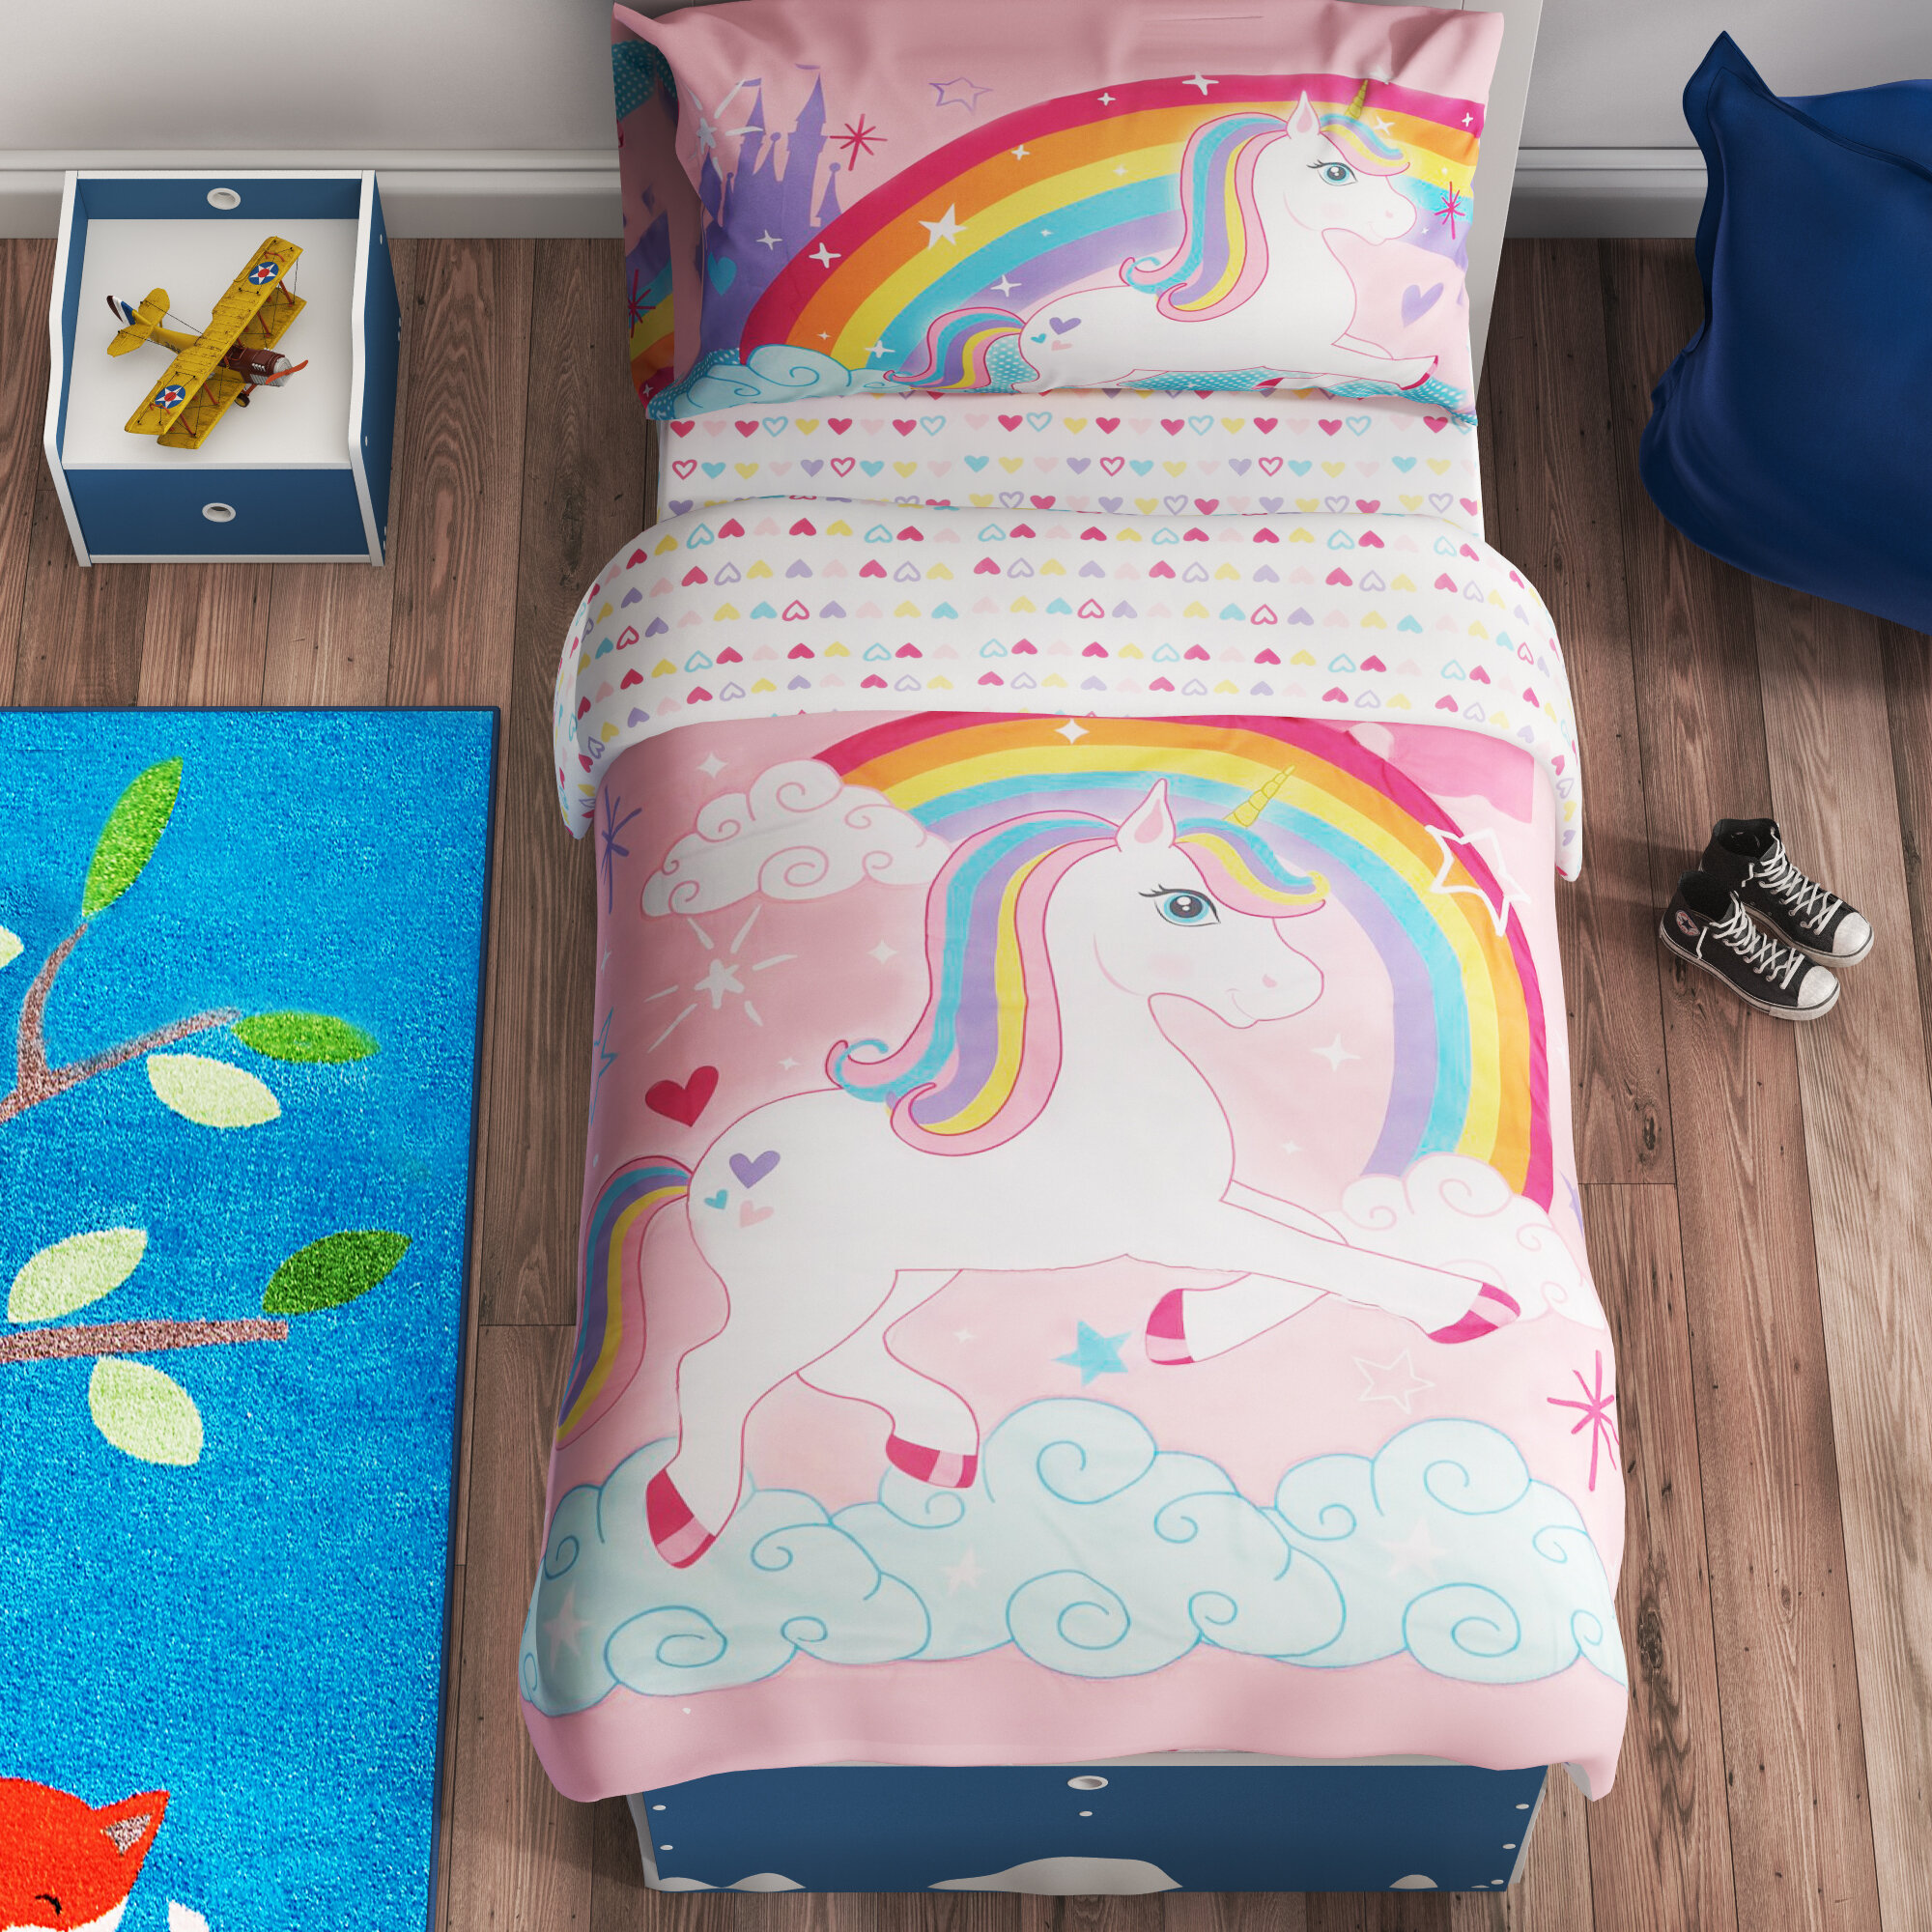 Toddler Bedding Sets You Ll Love In 2021 Wayfair